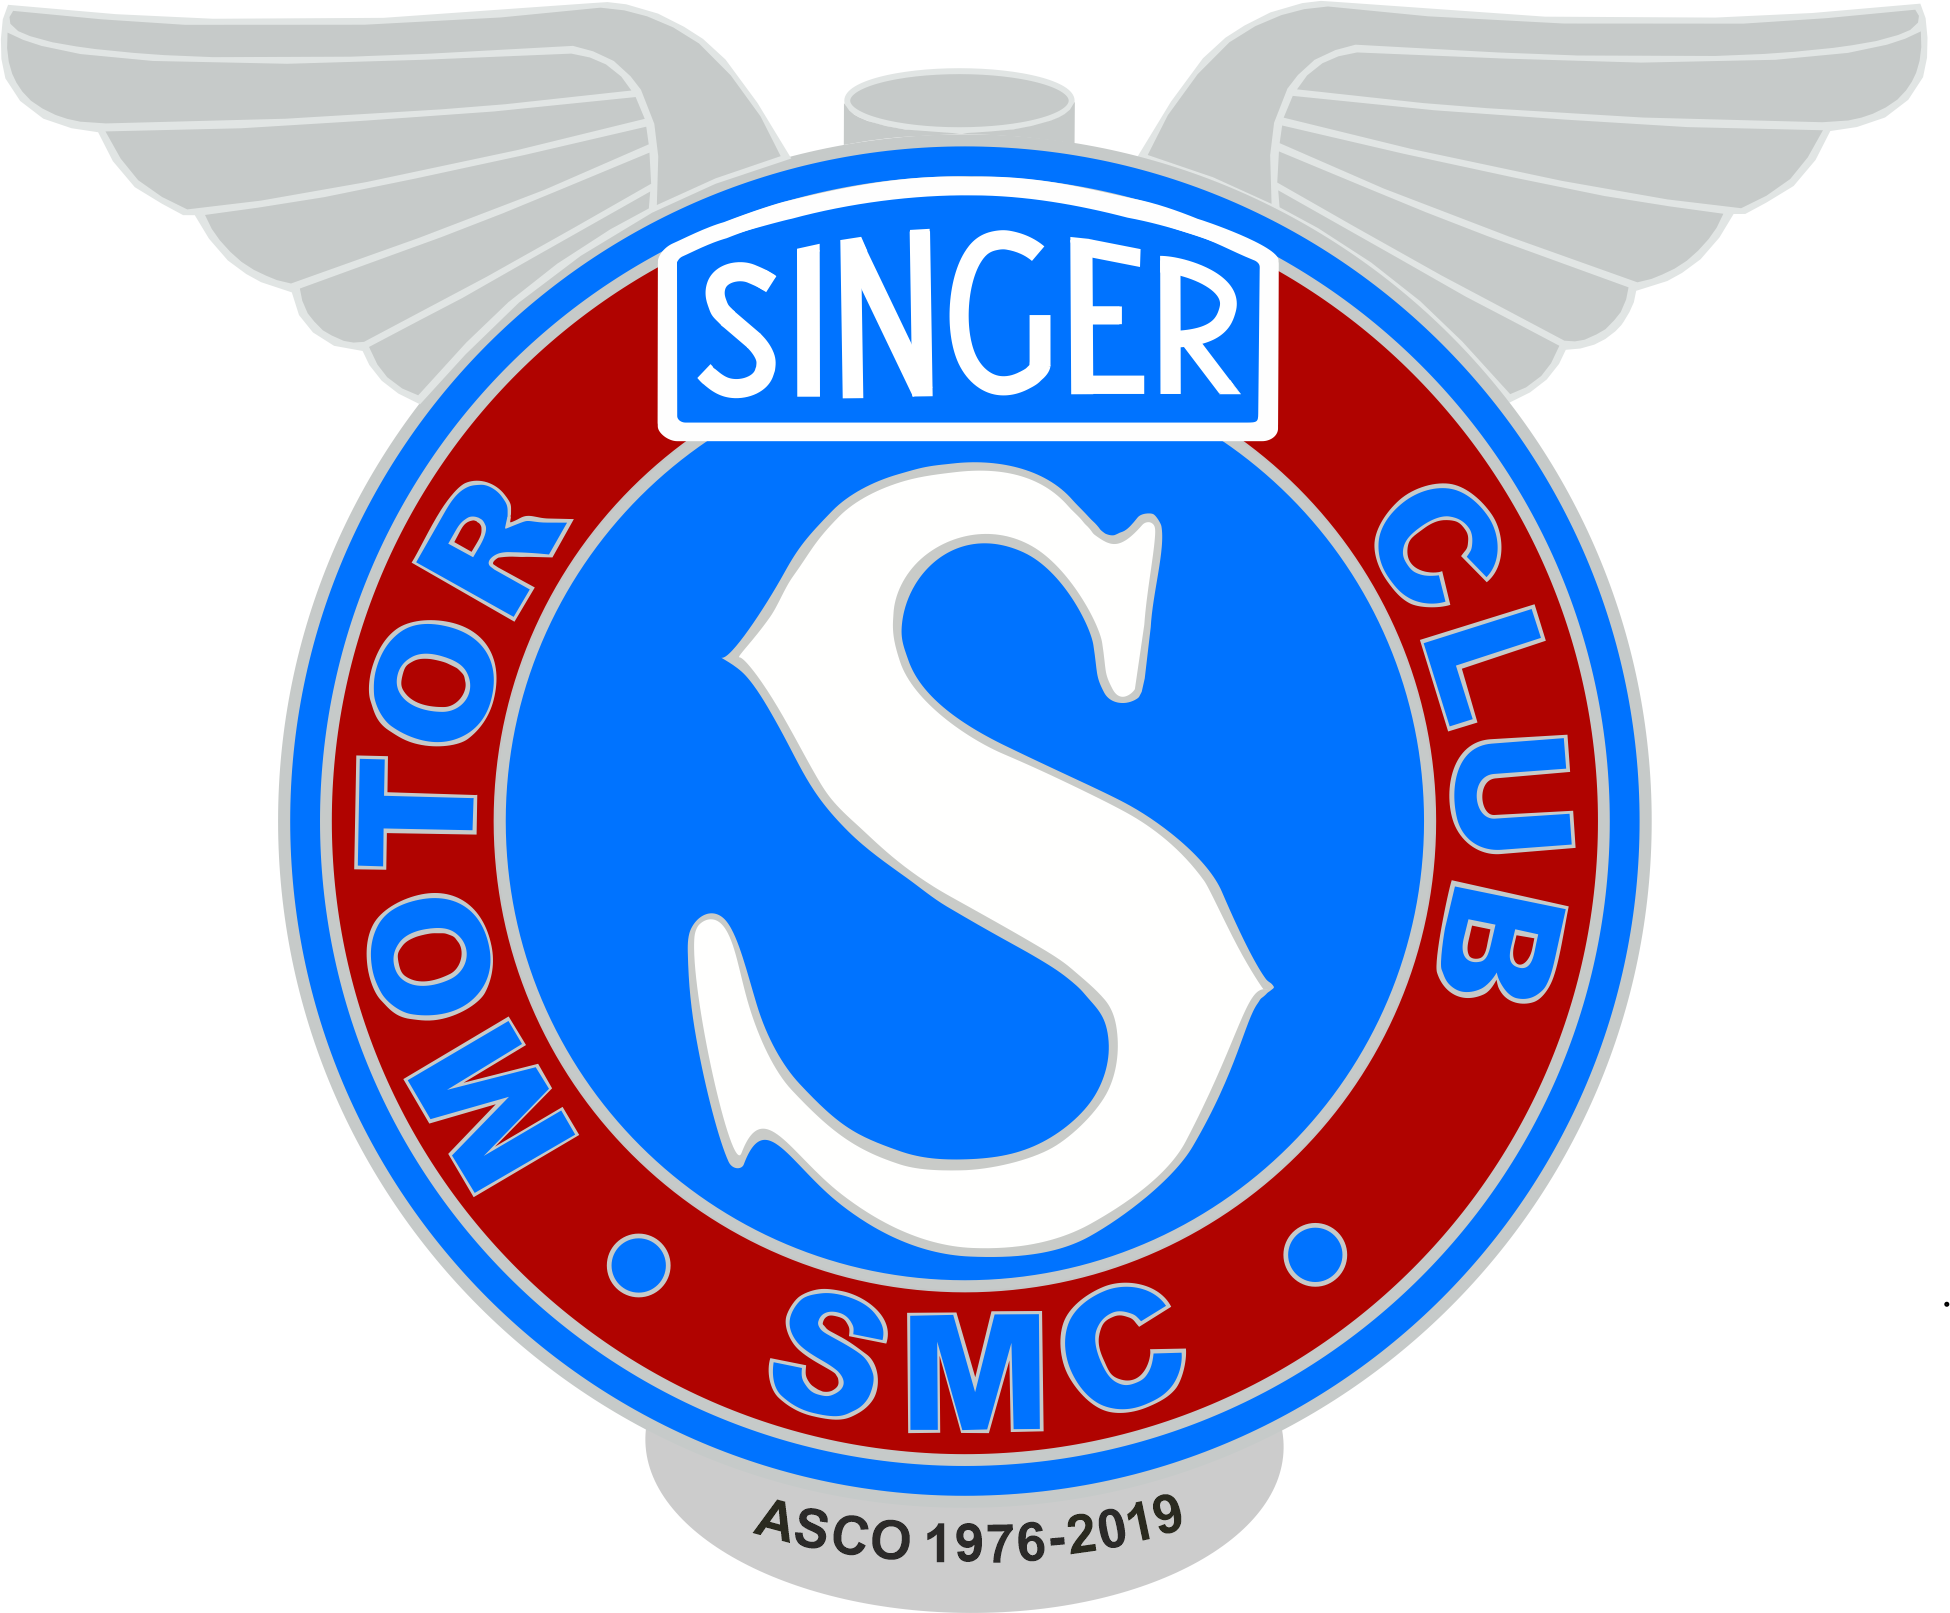 Singer Motor Club